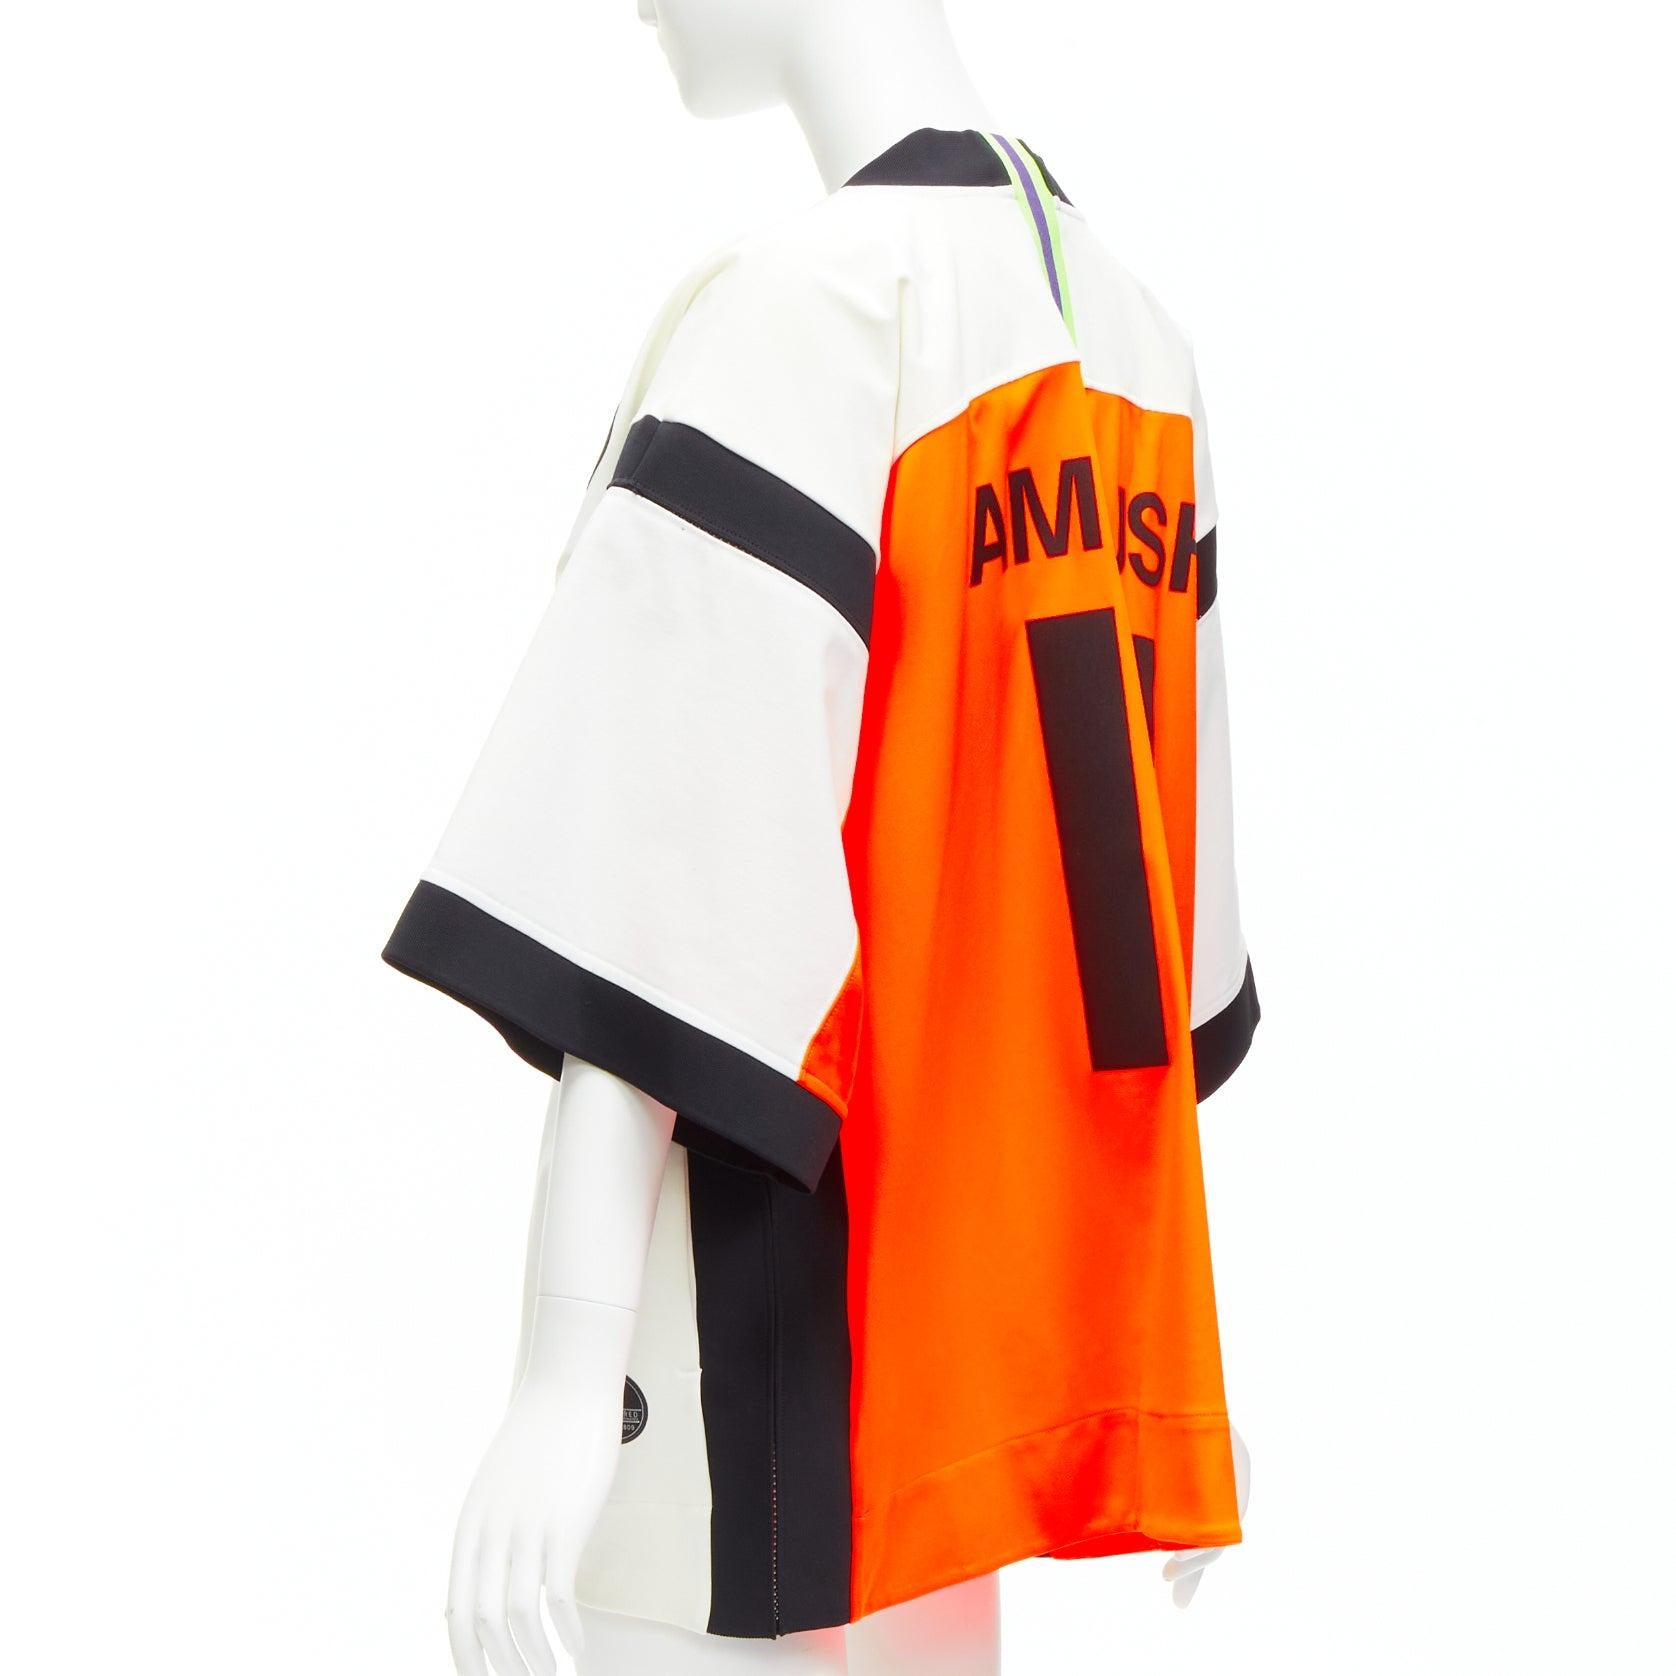 AMBUSh NIKE LAB 2019 orange logo badge kimono sleeve football jersey jacket XS In Good Condition For Sale In Hong Kong, NT